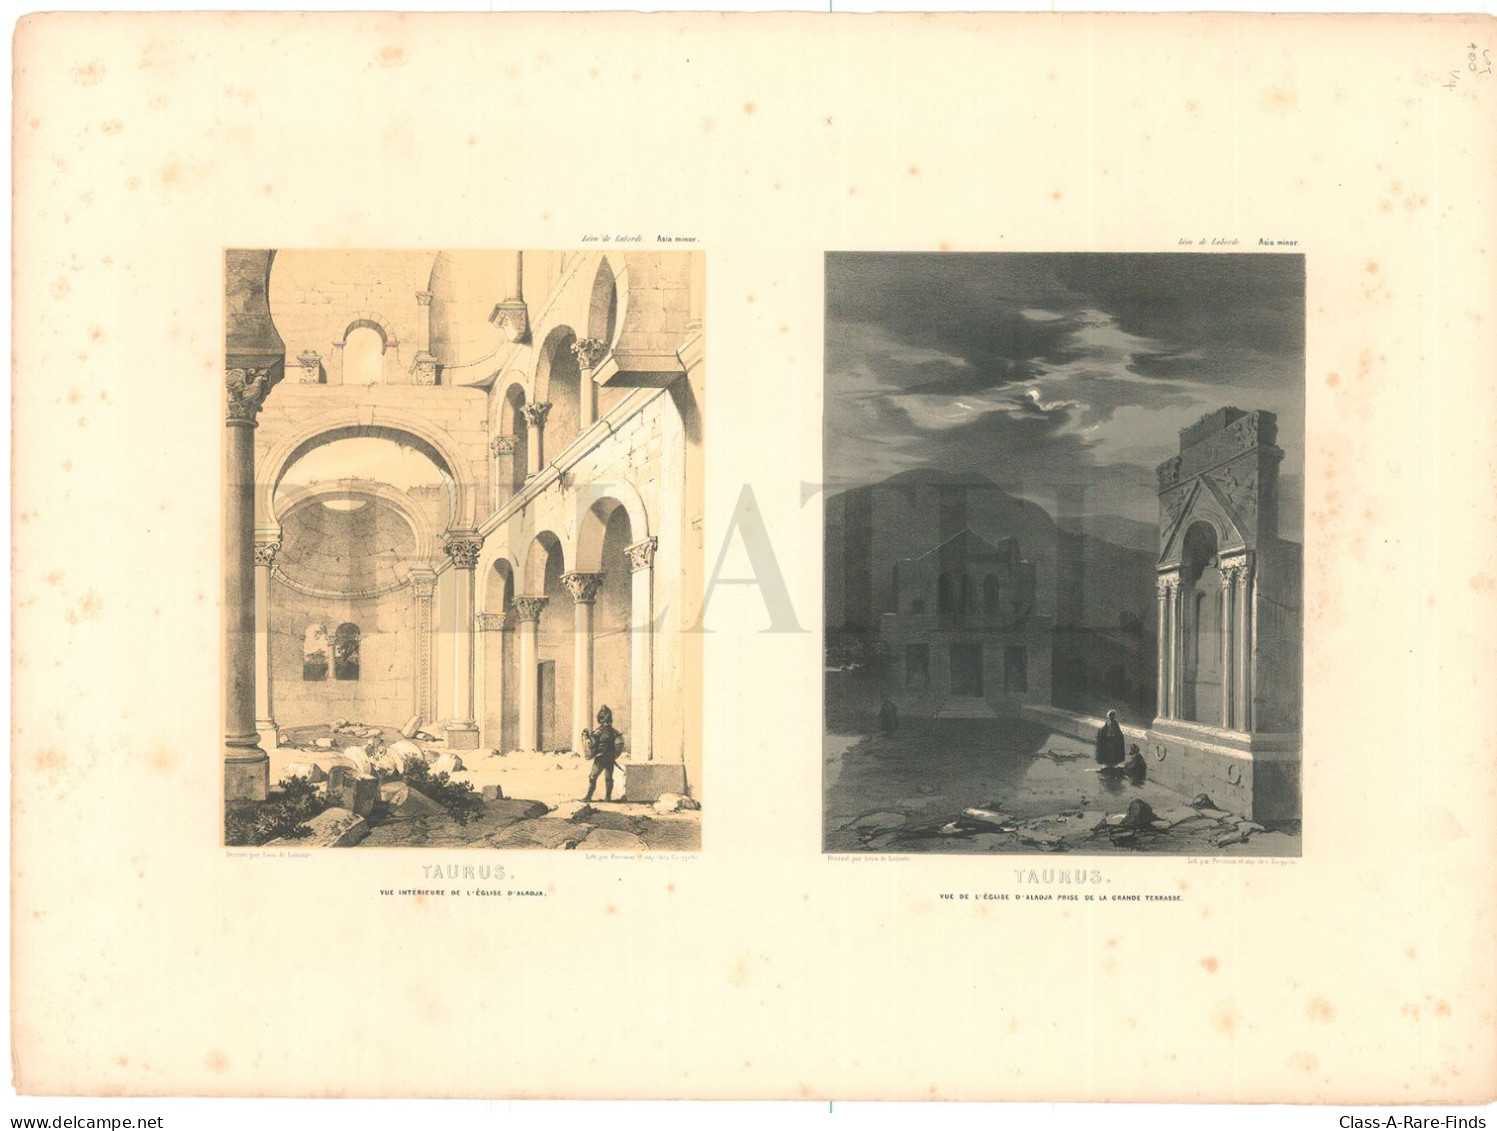 1838, LABORDE: "VOYAGE DE L'ASIE MINEURE" LITOGRAPH PLATE #69. ARCHAEOLOGY / TURKEY / ANATOLIA / SIVAS / ALACA - Archeologie